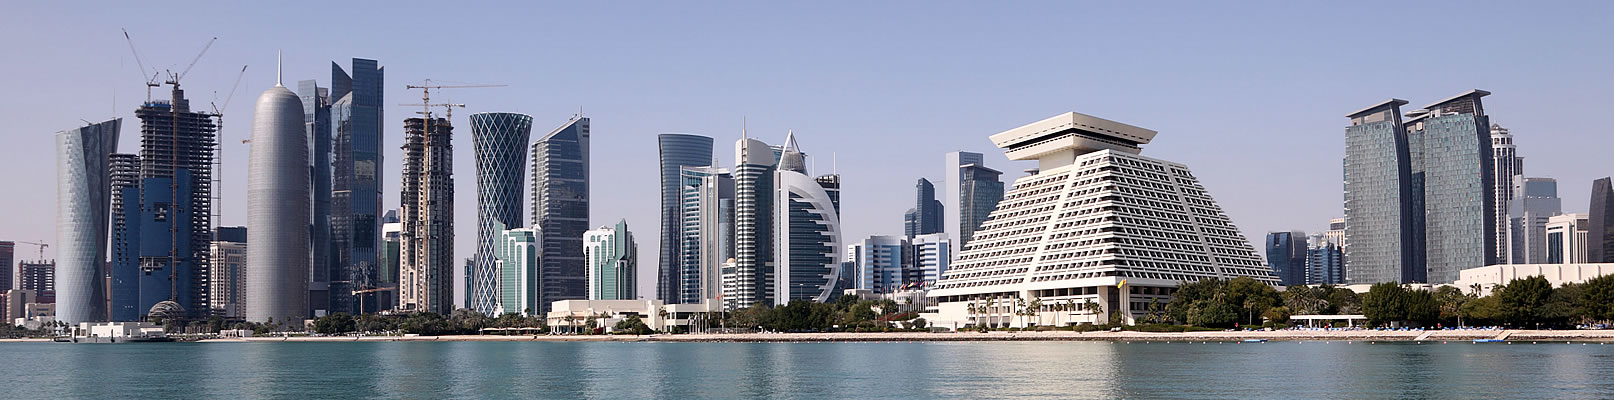 Real Estate Qatar